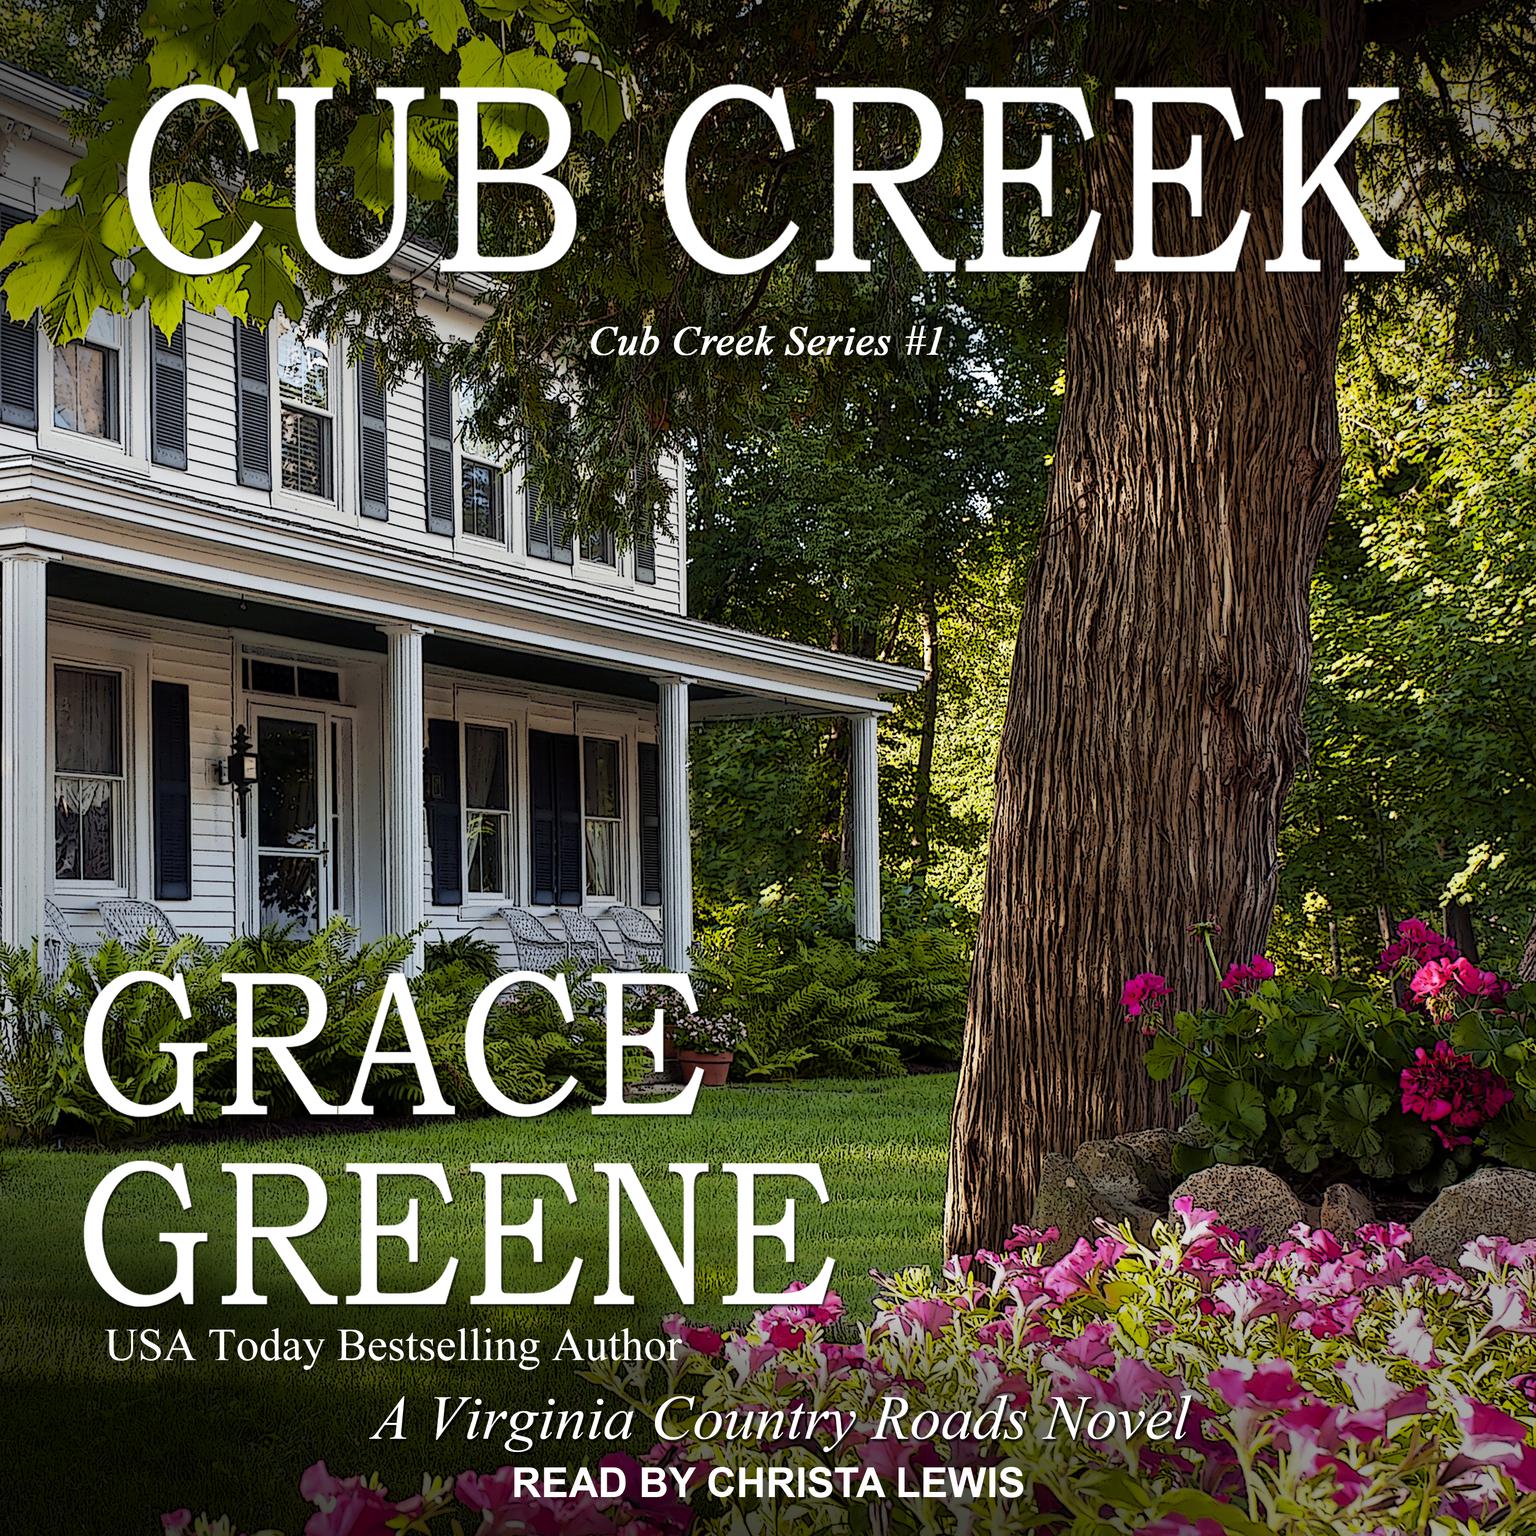 Cub Creek: A Virginia Country Roads Novel Audiobook, by Grace Greene